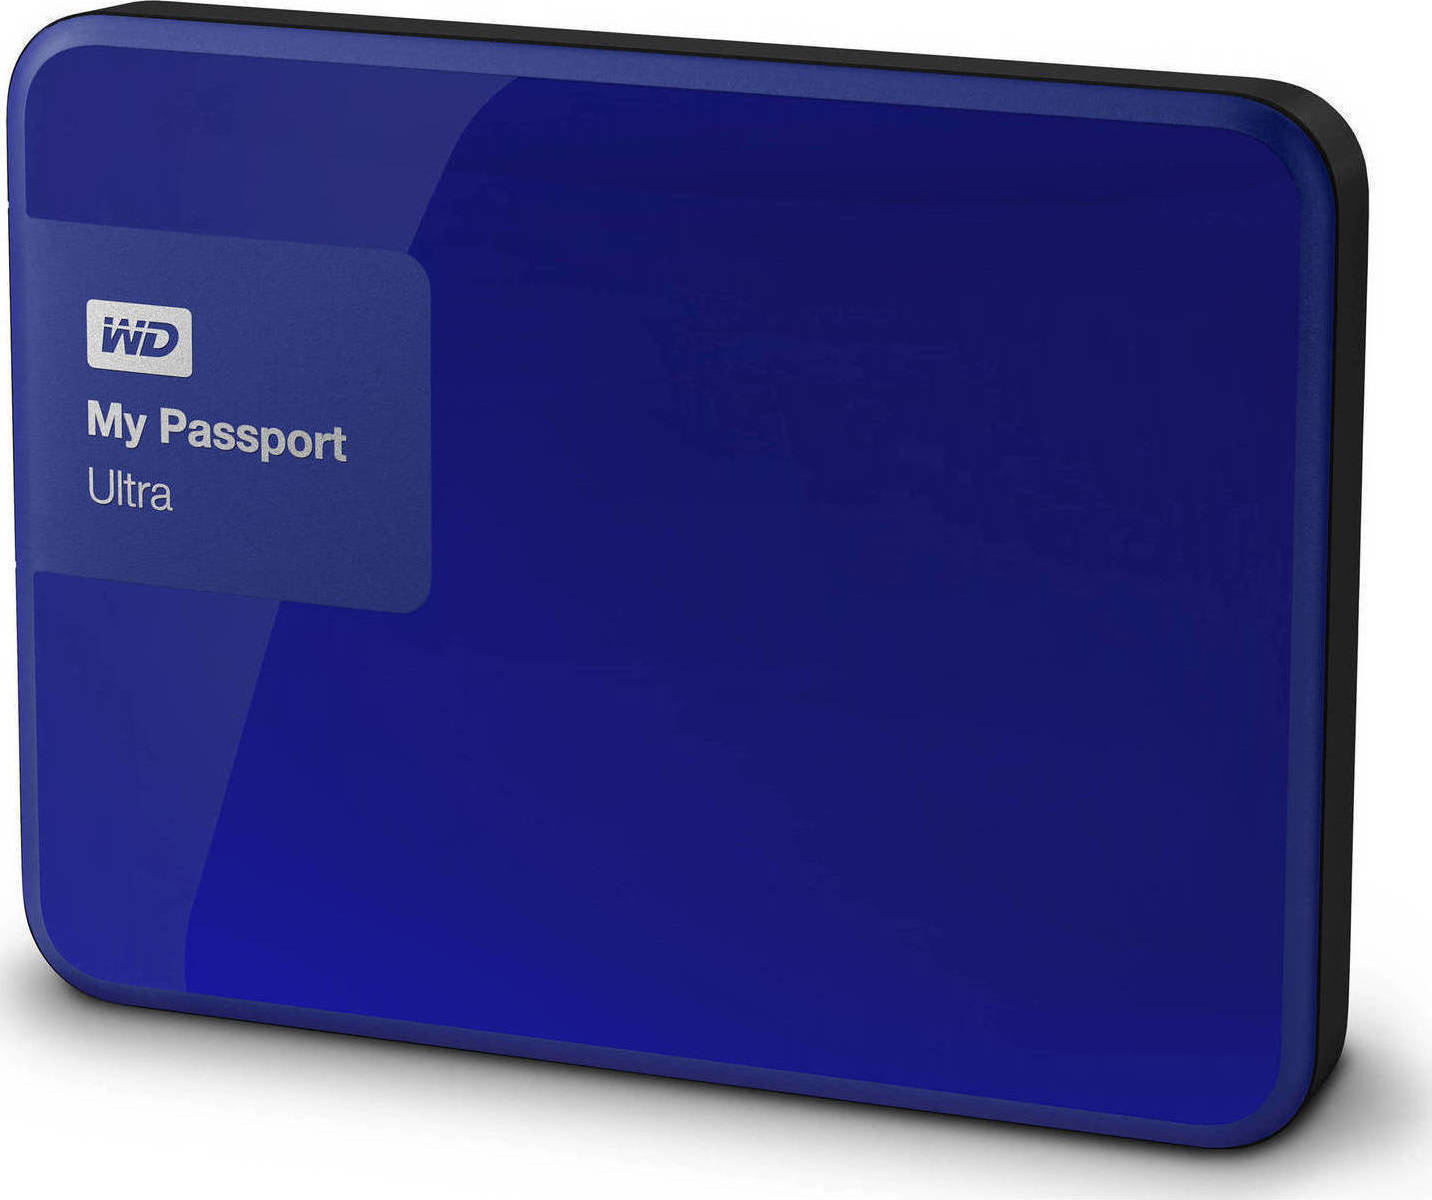 wd my passport ultra unlock software